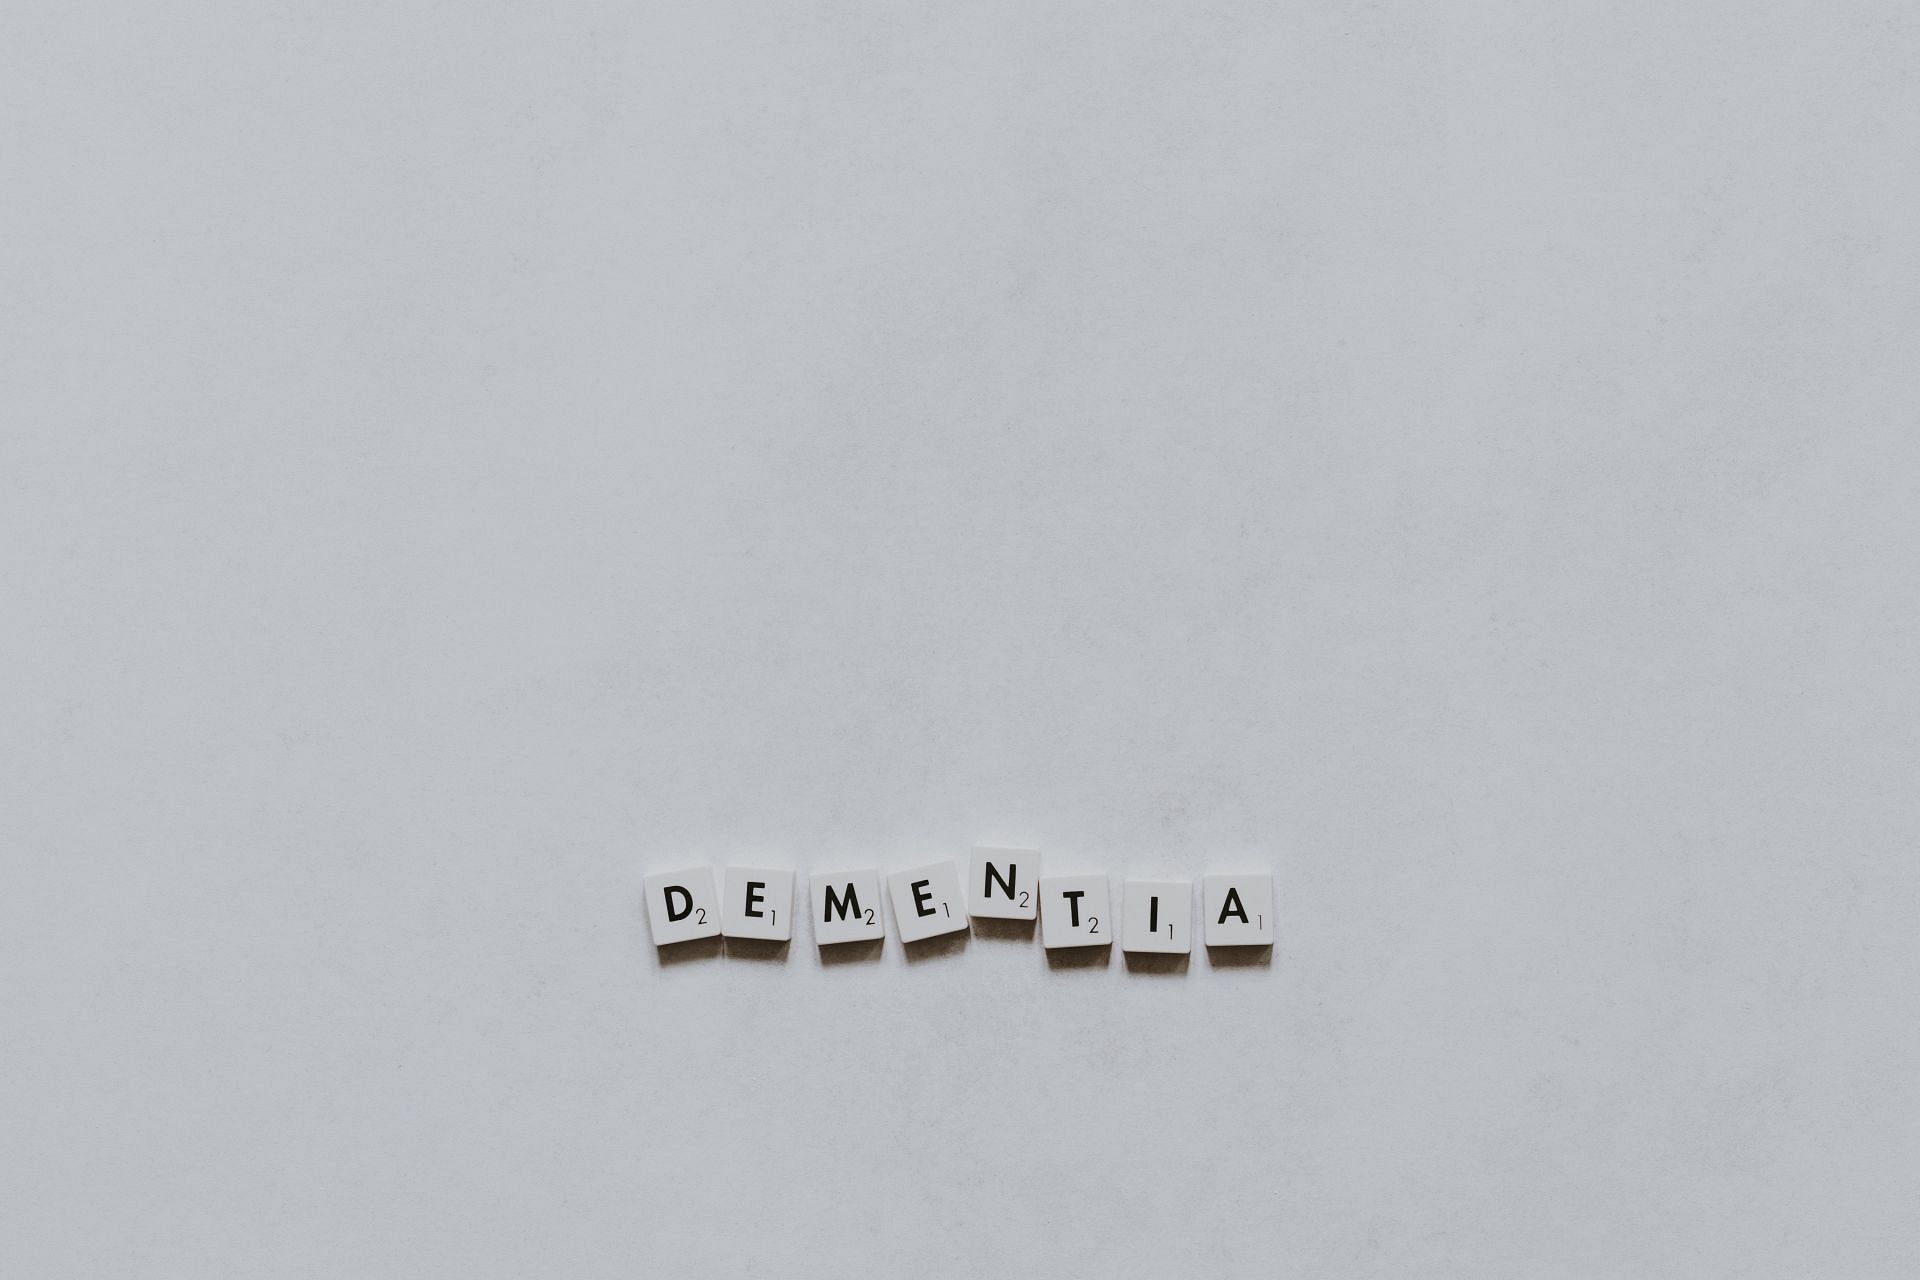 Dementia is a major neurodegenerative disorder. (Image via Unsplash/Pawel Czerwinski)